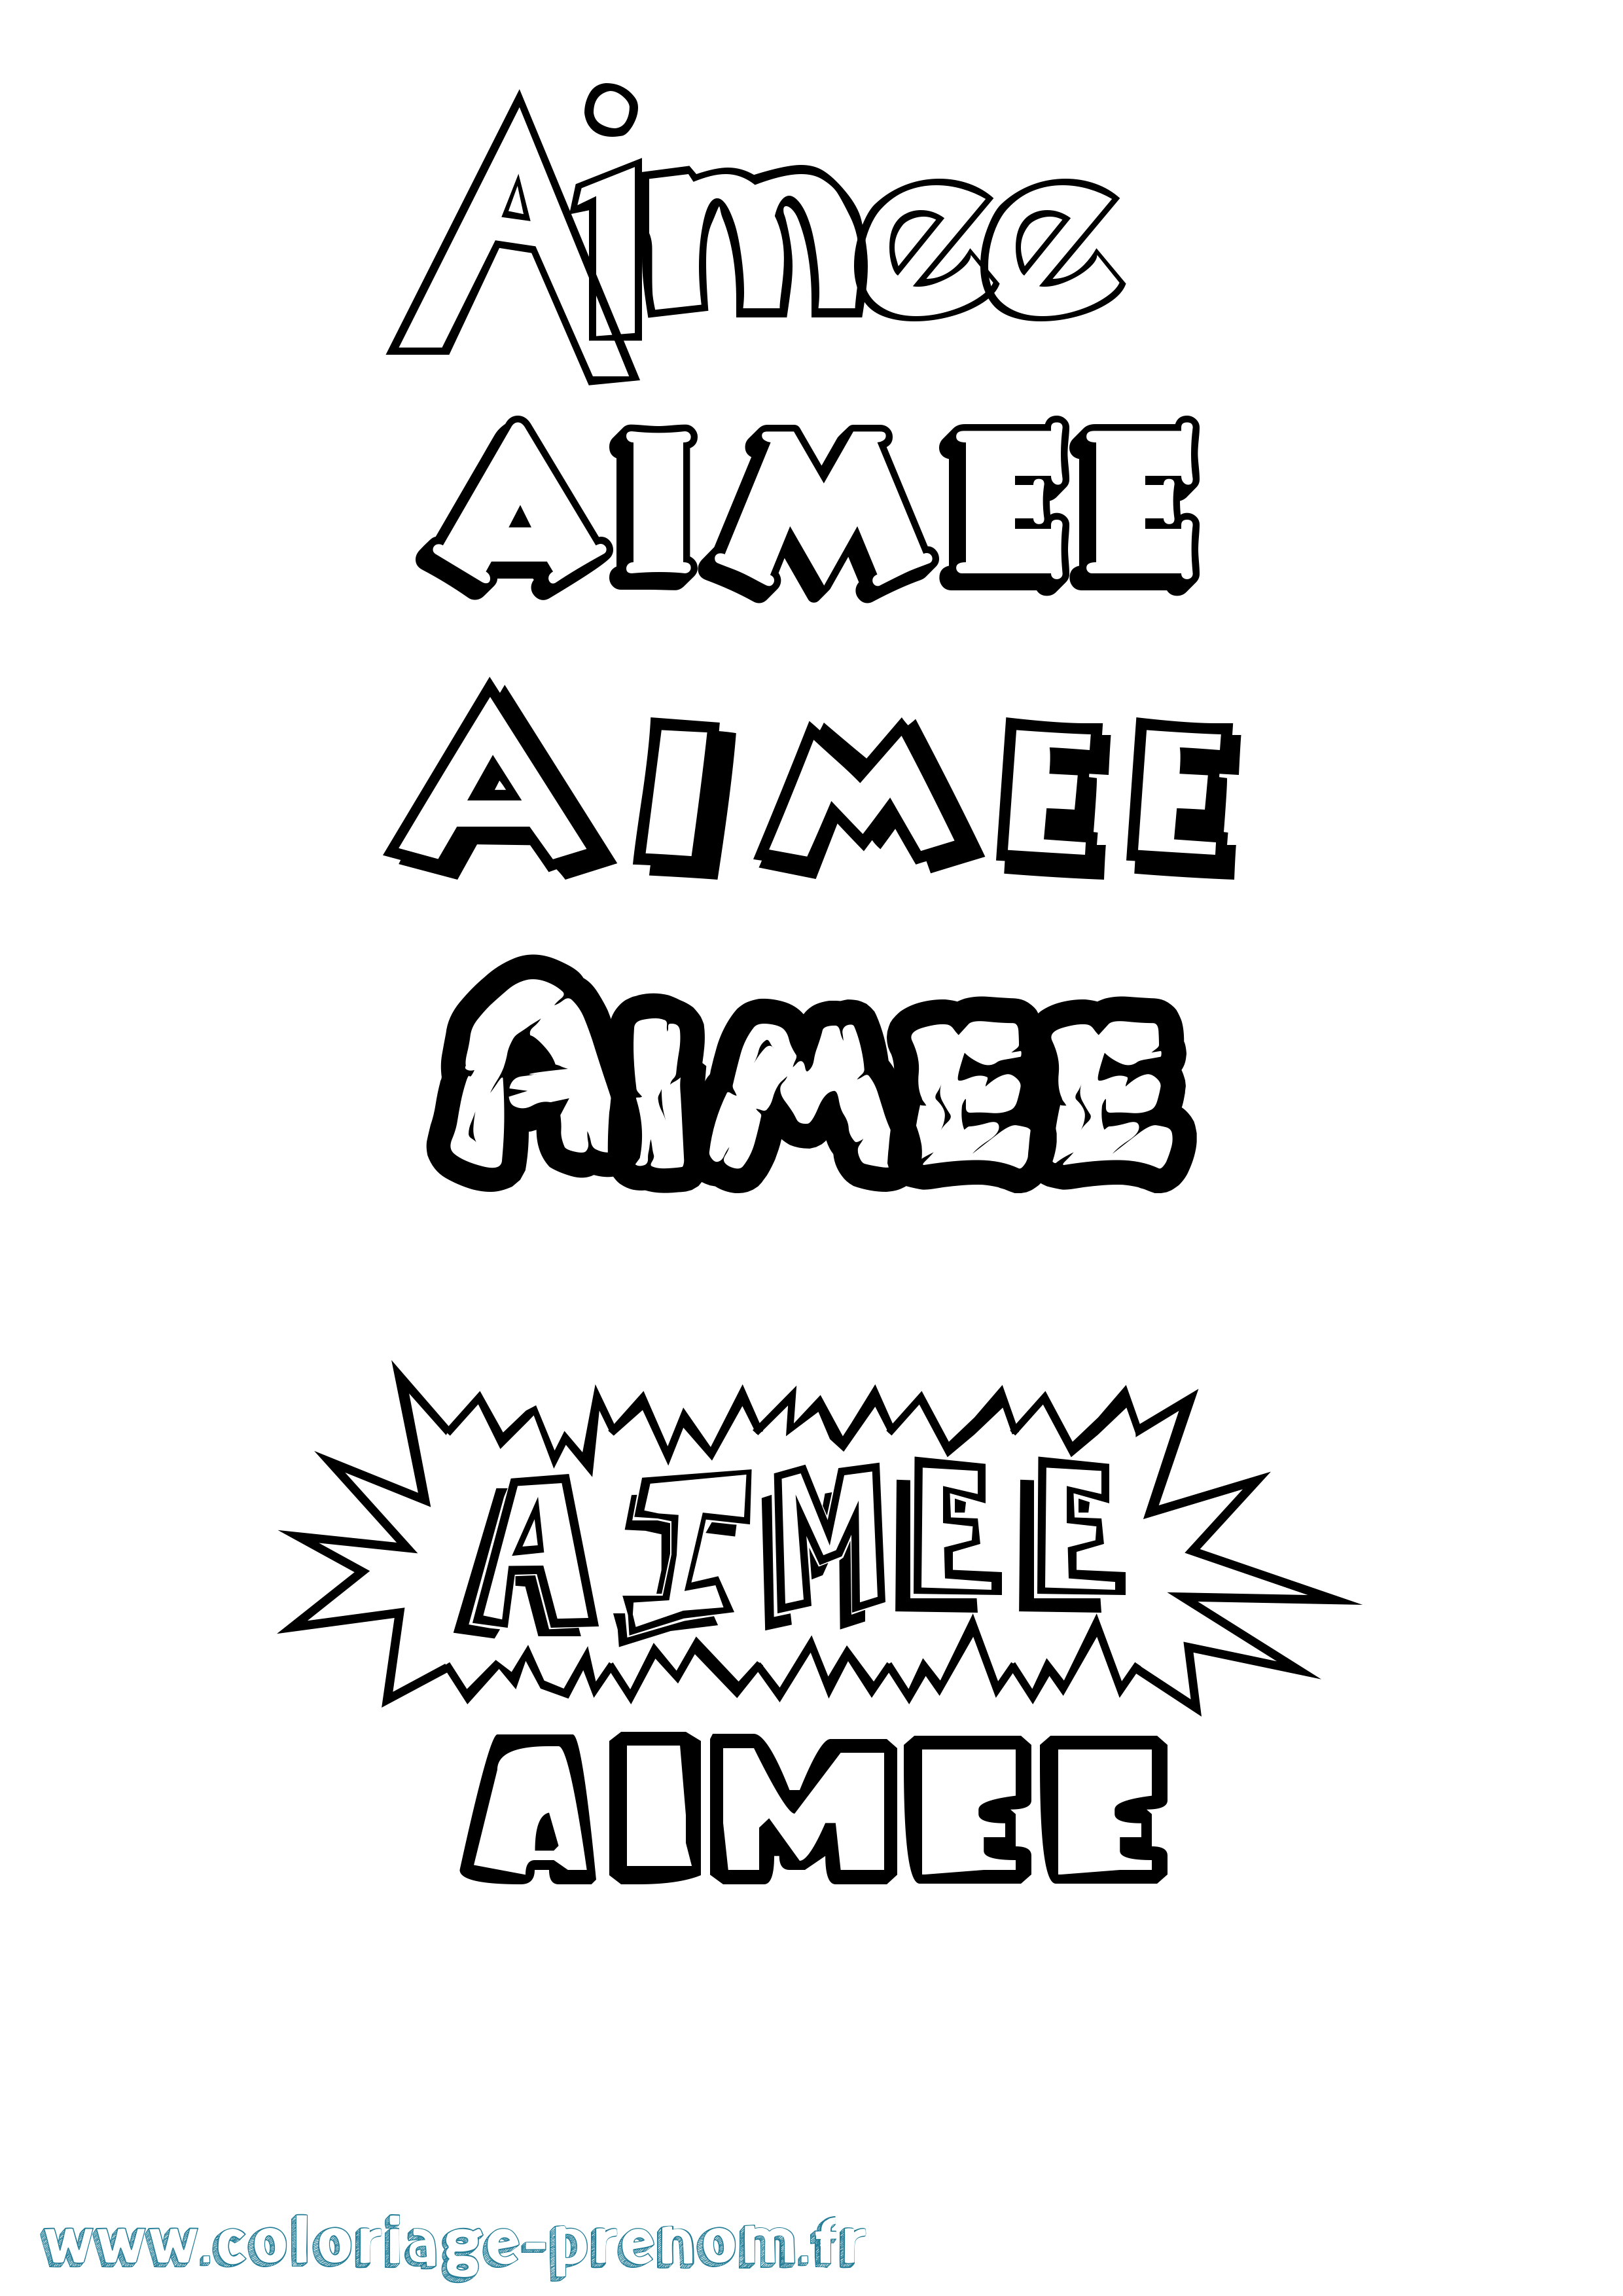 Coloriage prénom Aimee